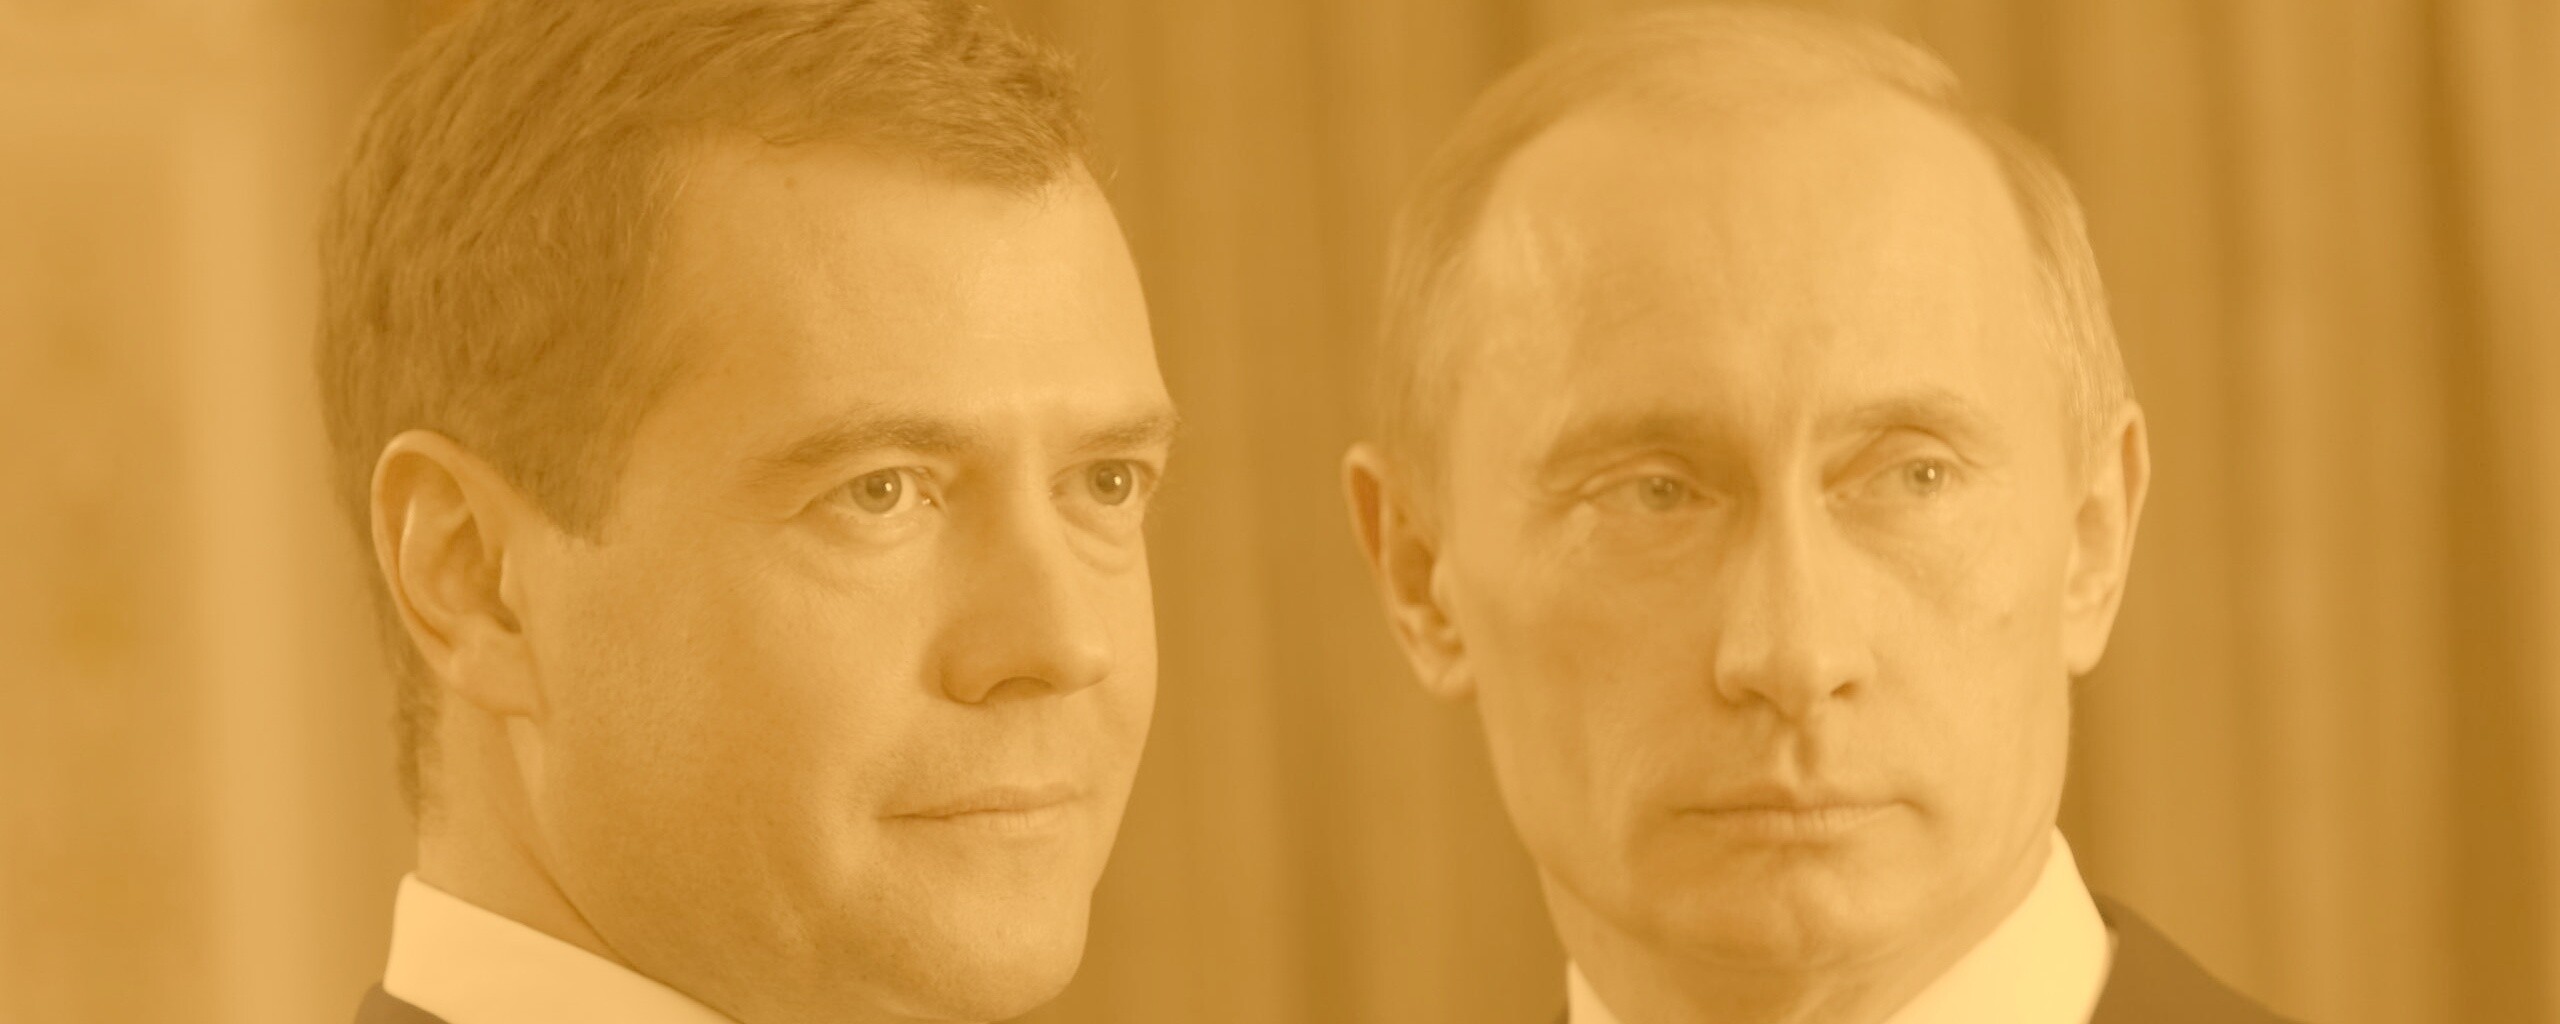 Путин и Медведев обои